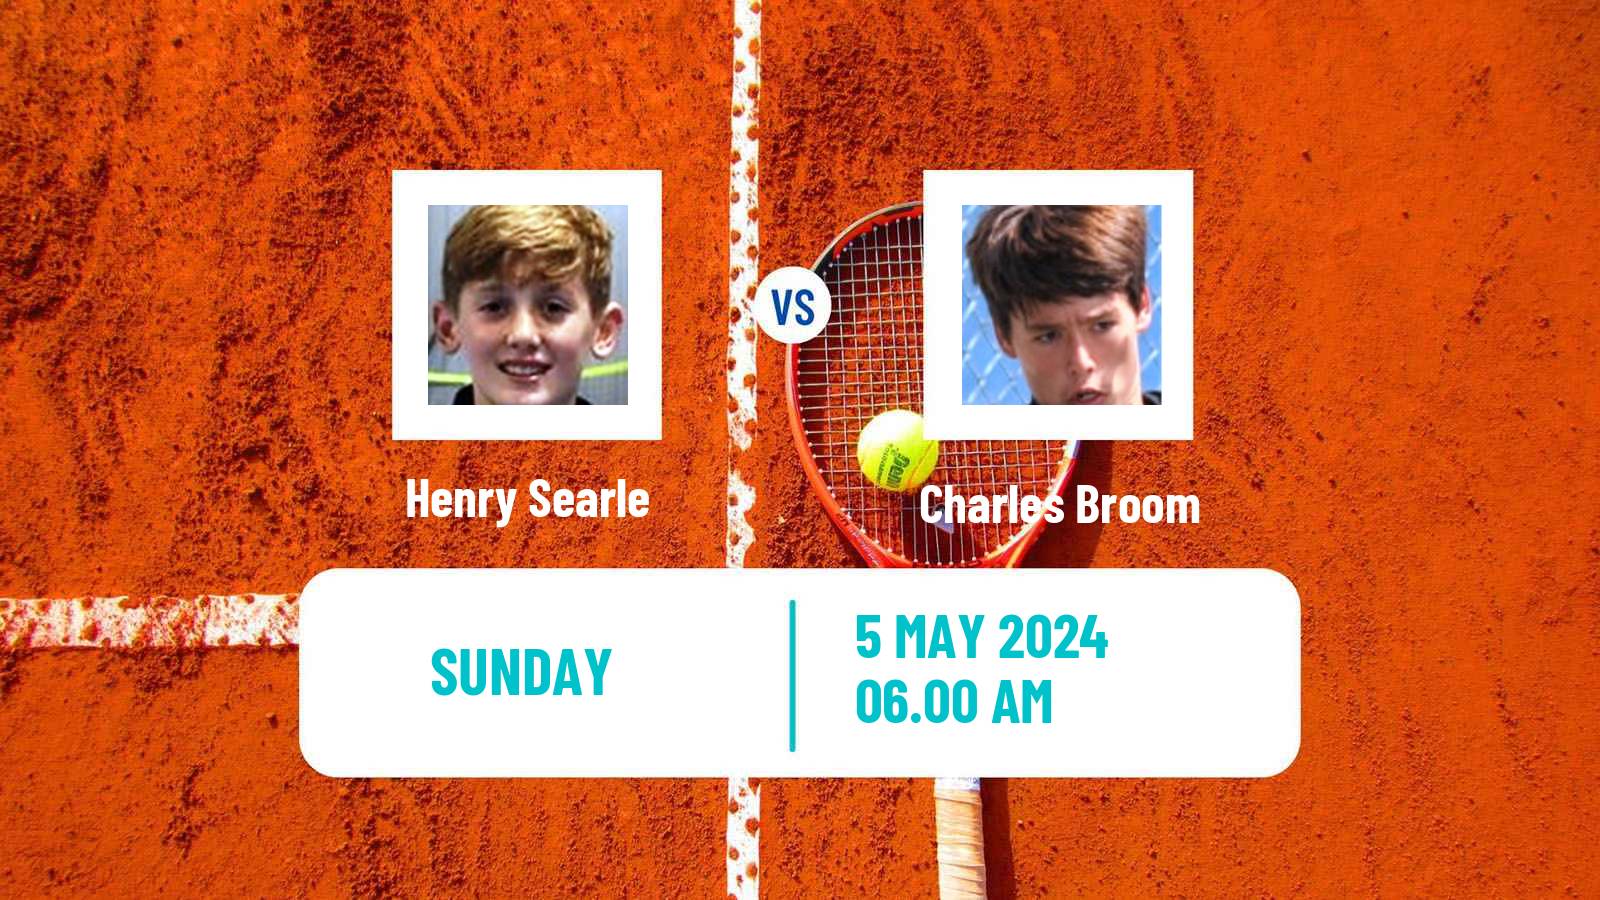 Tennis ITF M25 Nottingham 2 Men Henry Searle - Charles Broom